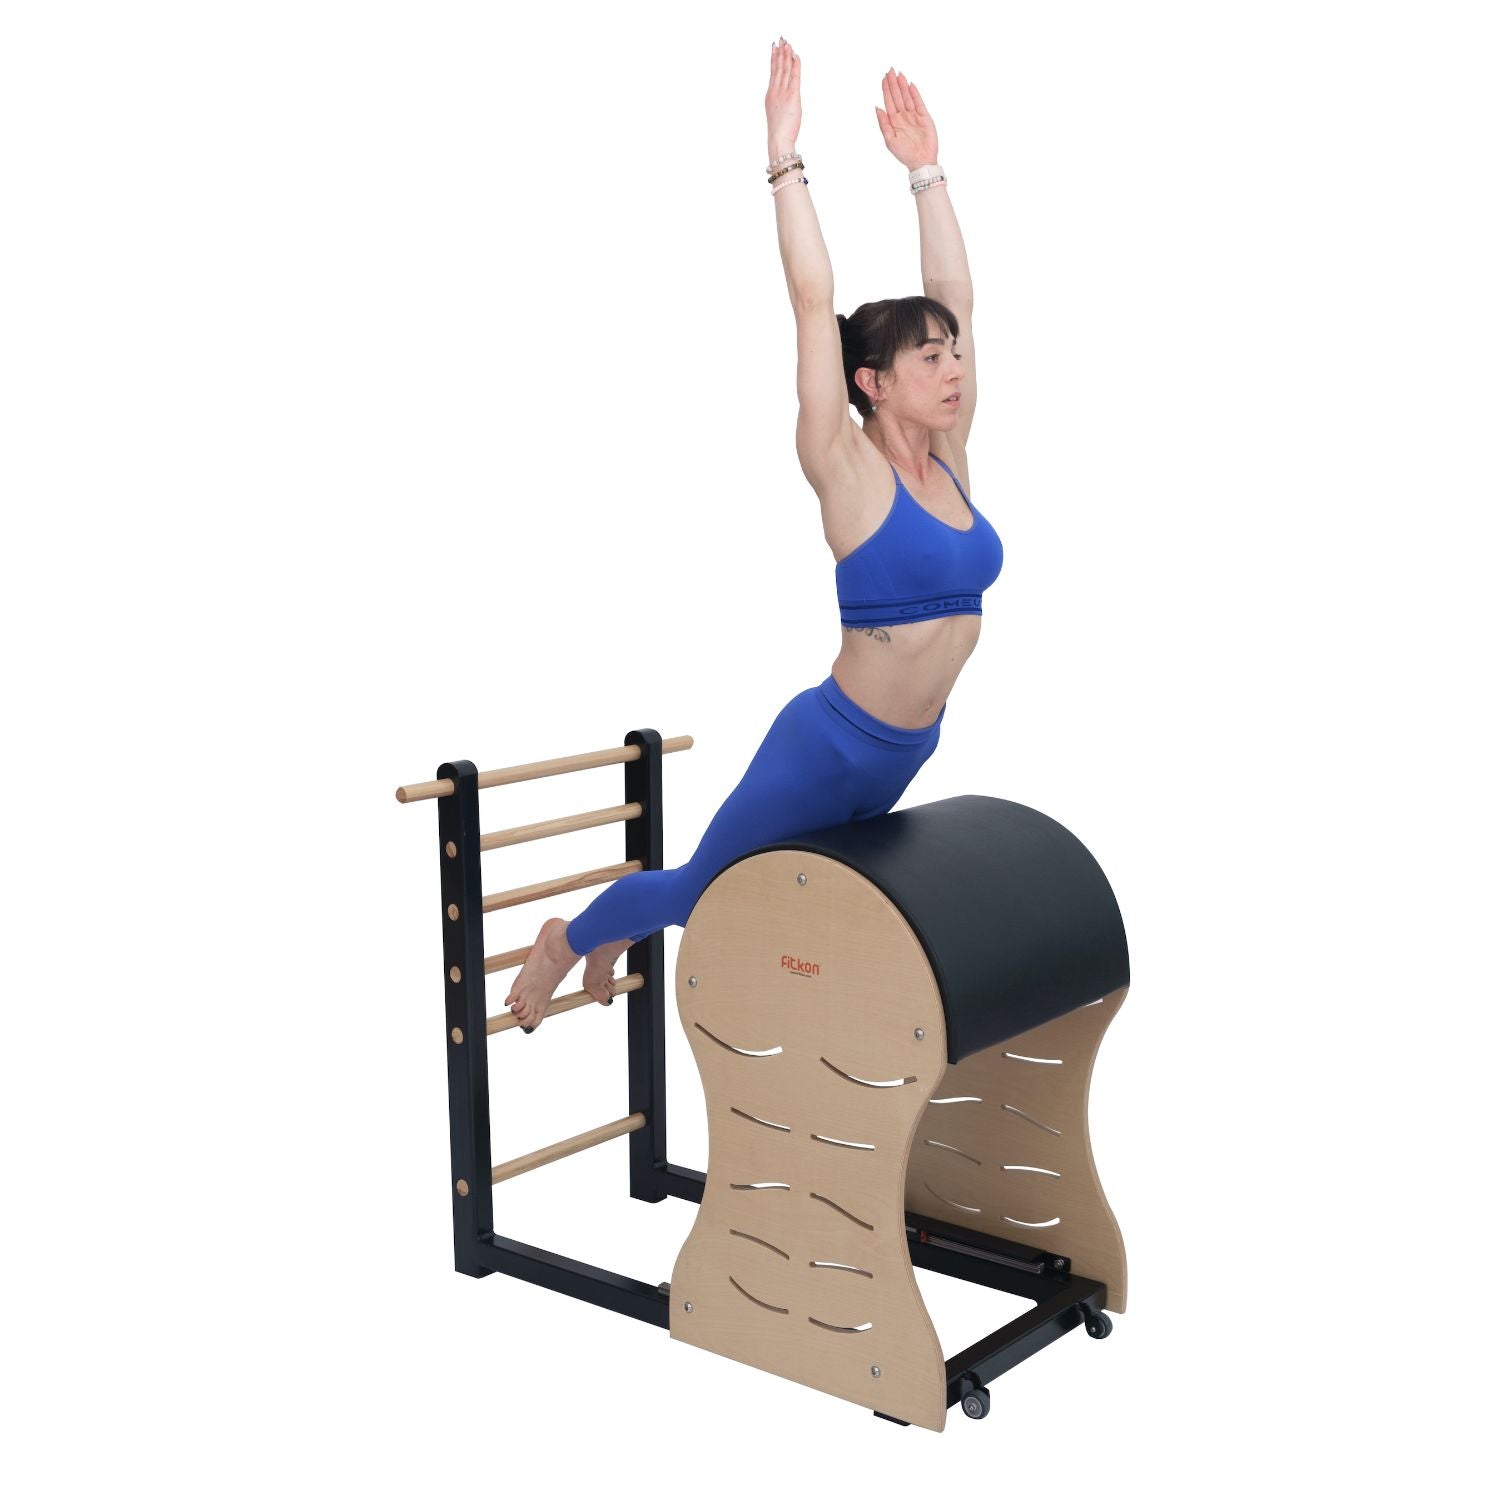 Elina Pilates Ladder Barrel